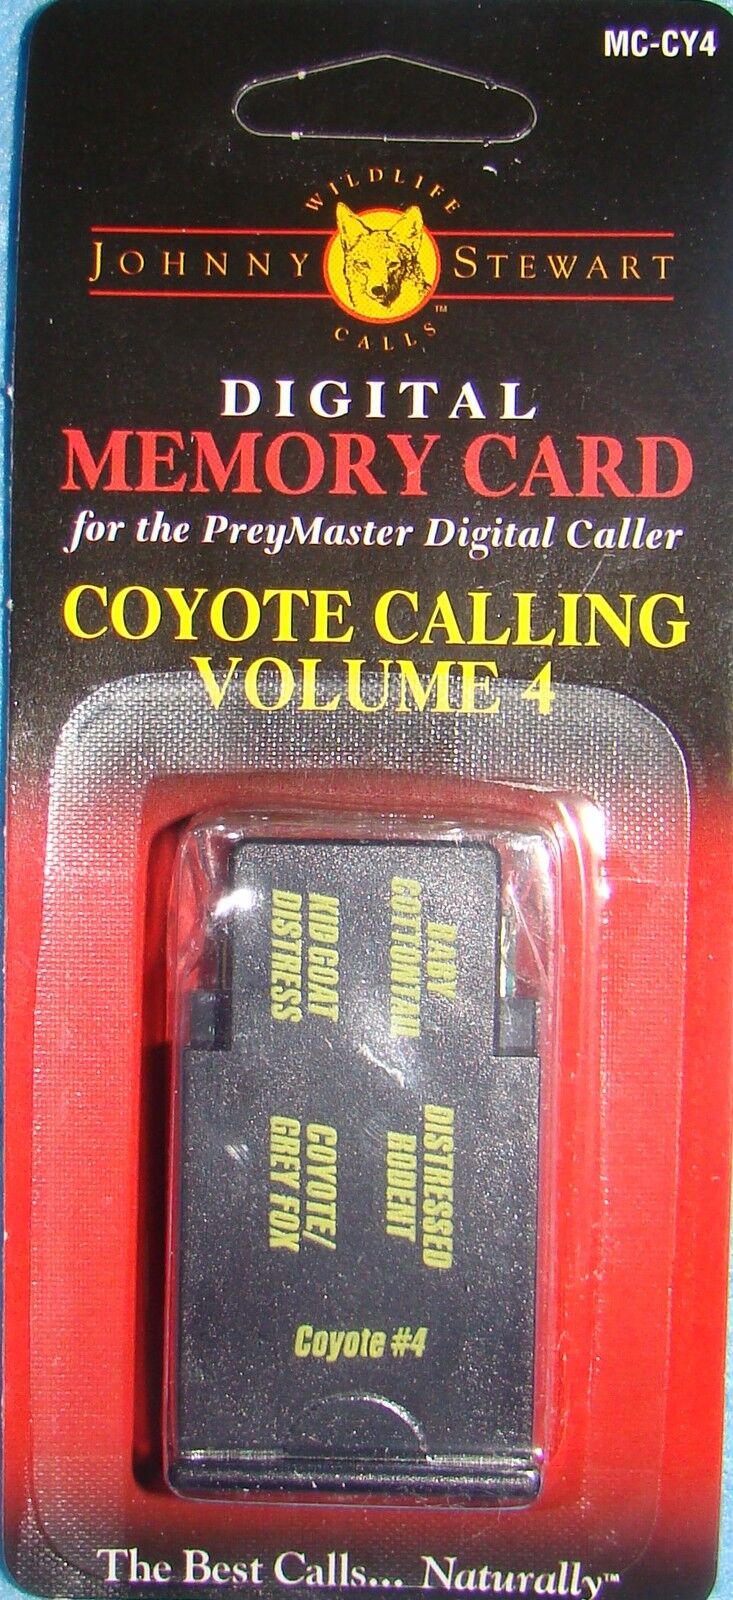 JOHNNY STEWART COYOTE CALLING VOLUME 4 PREYMASTER MEMORY CARD PM-3 & PM-4 NEW